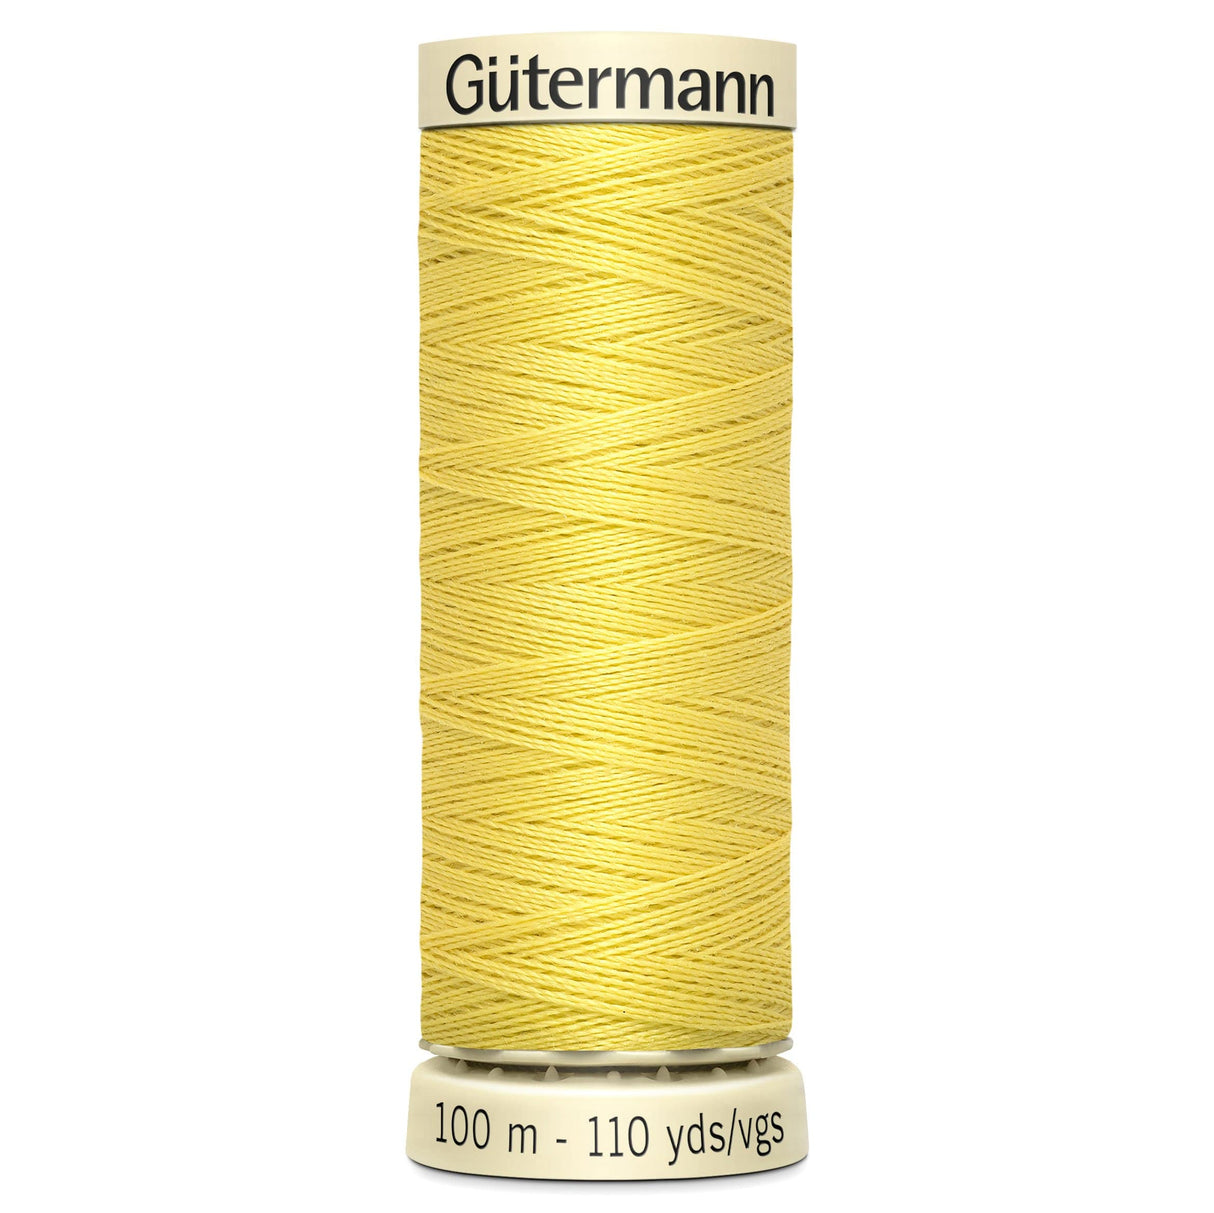 Groves Haberdashery 580 Gutermann Thread Sewing Cotton 100 m Black to Pink